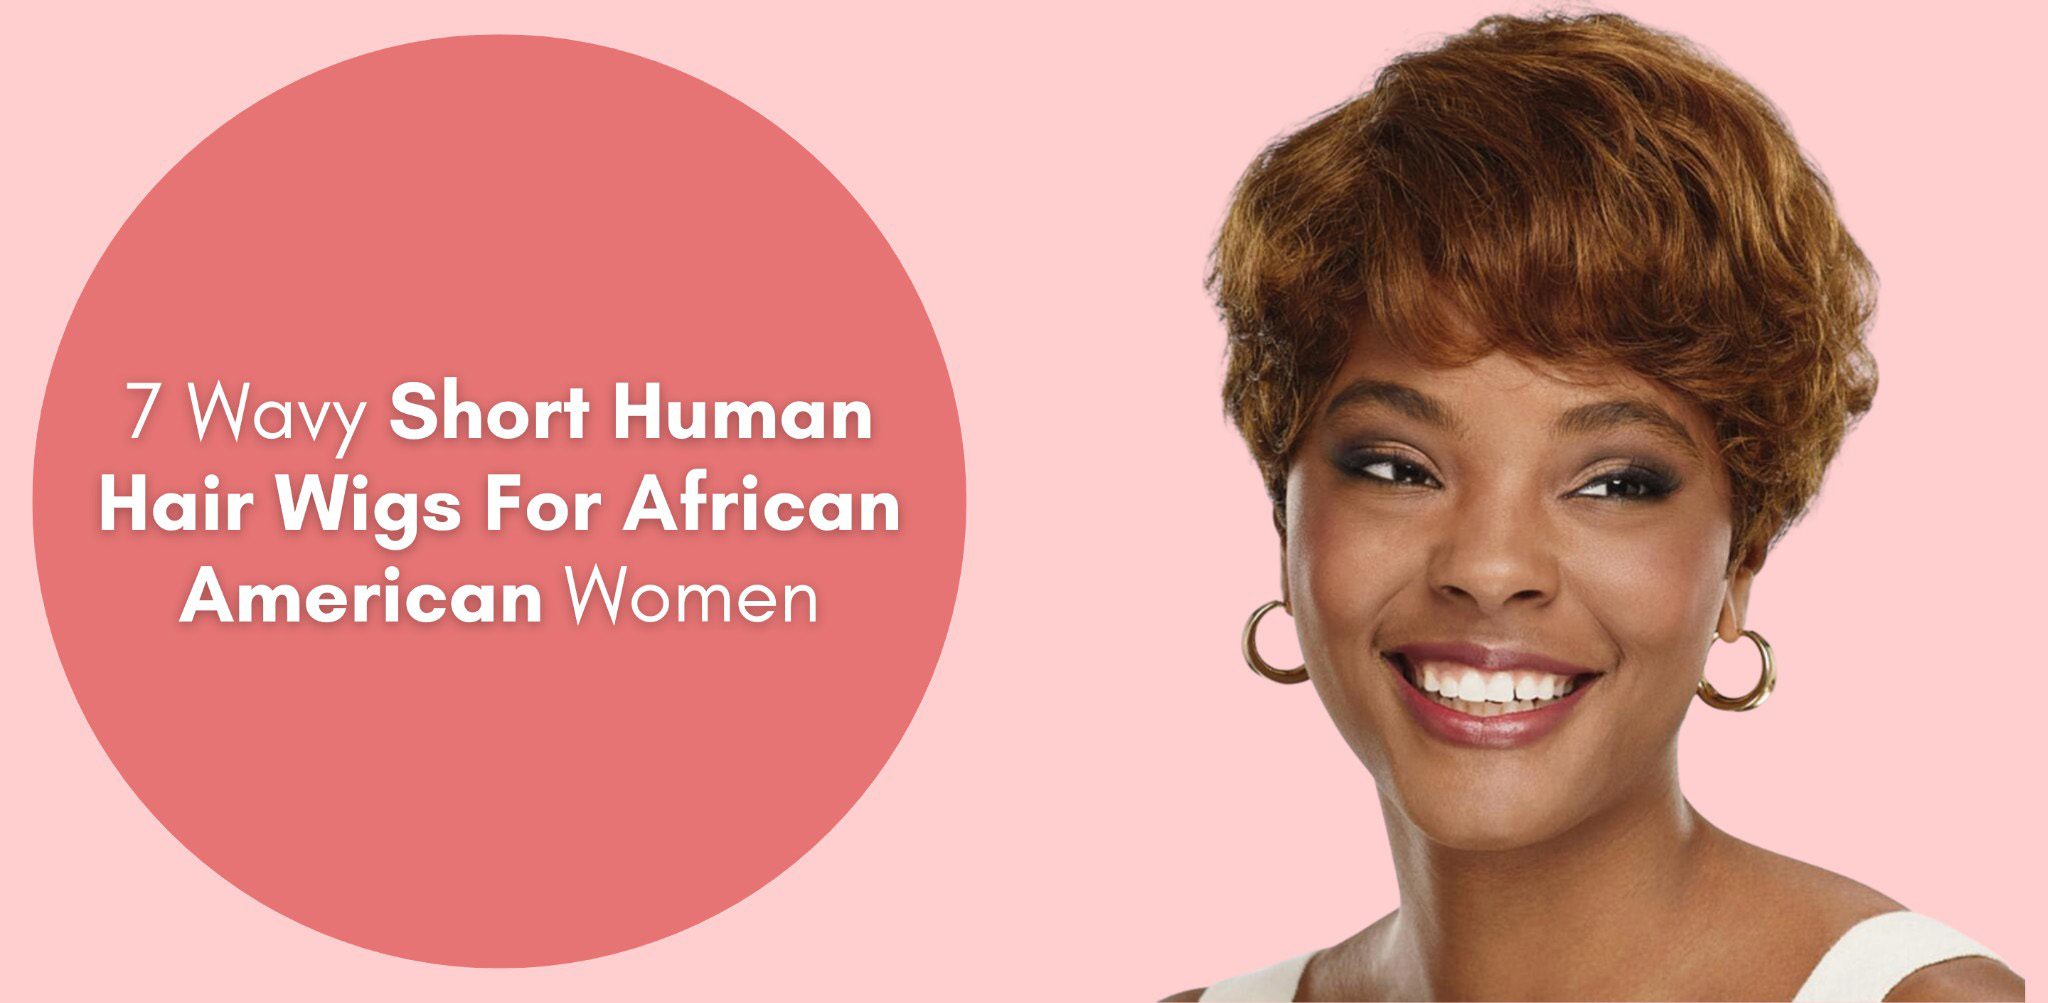 7 Wavy Short Human Hair Wigs For African American Women